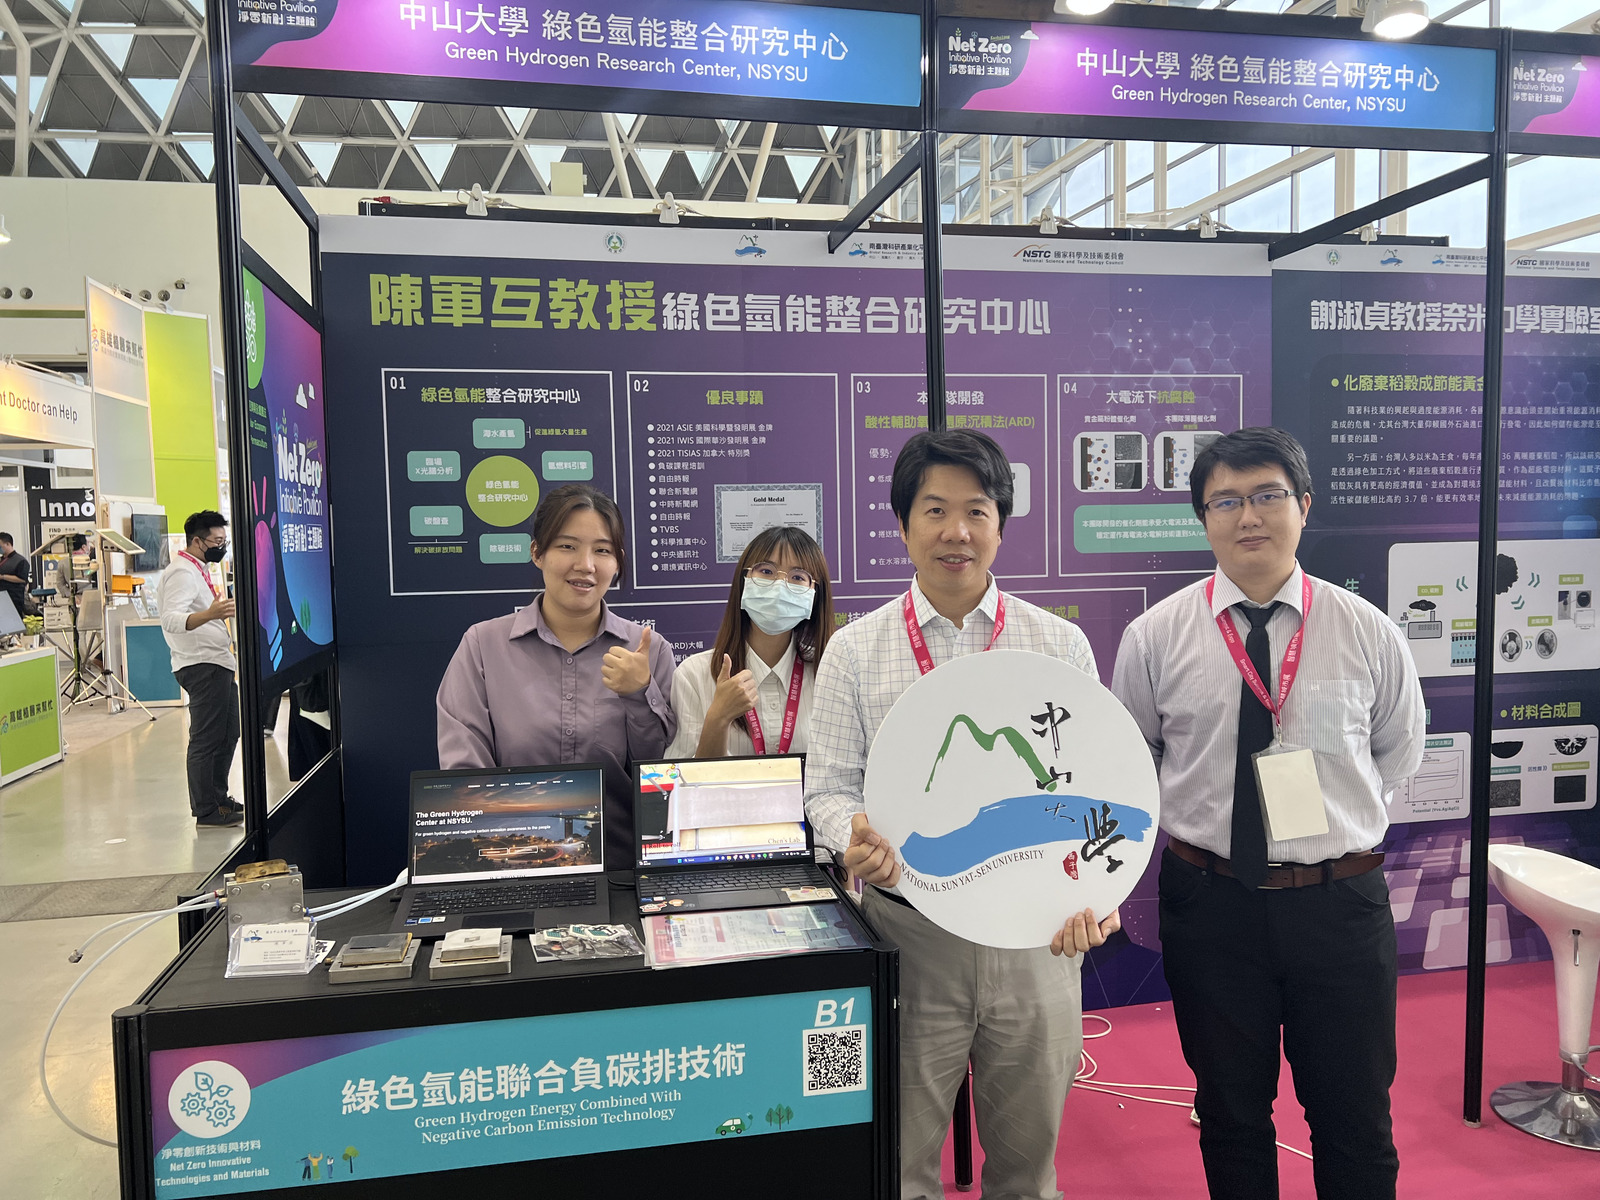 Professor Chun-Hu Chen and the Green Hydrogen Research Center team